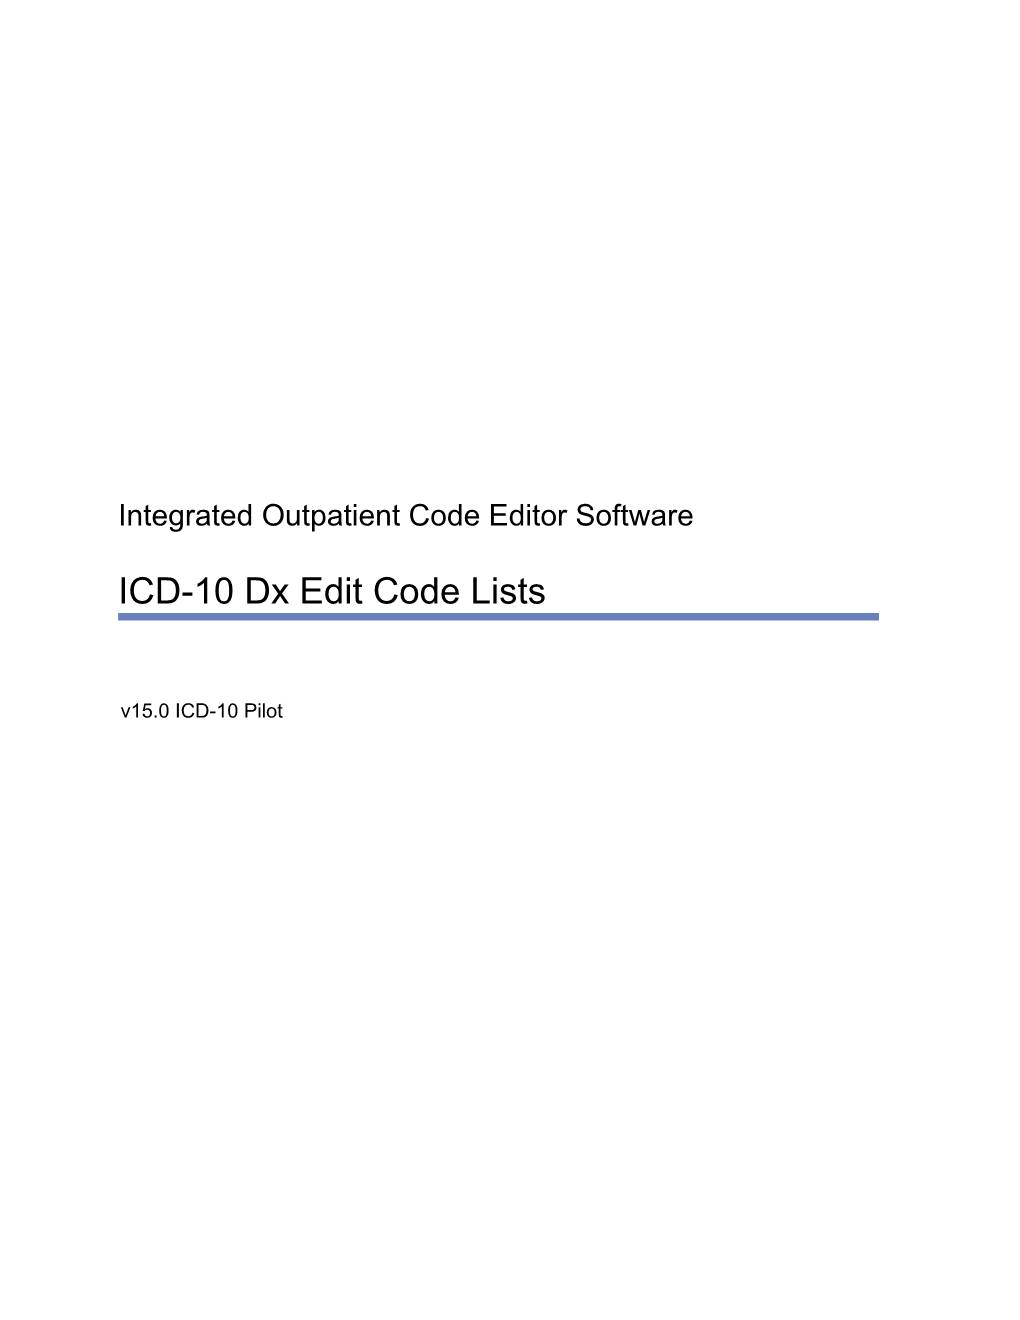 ICD-10 Dx Edit Code Lists